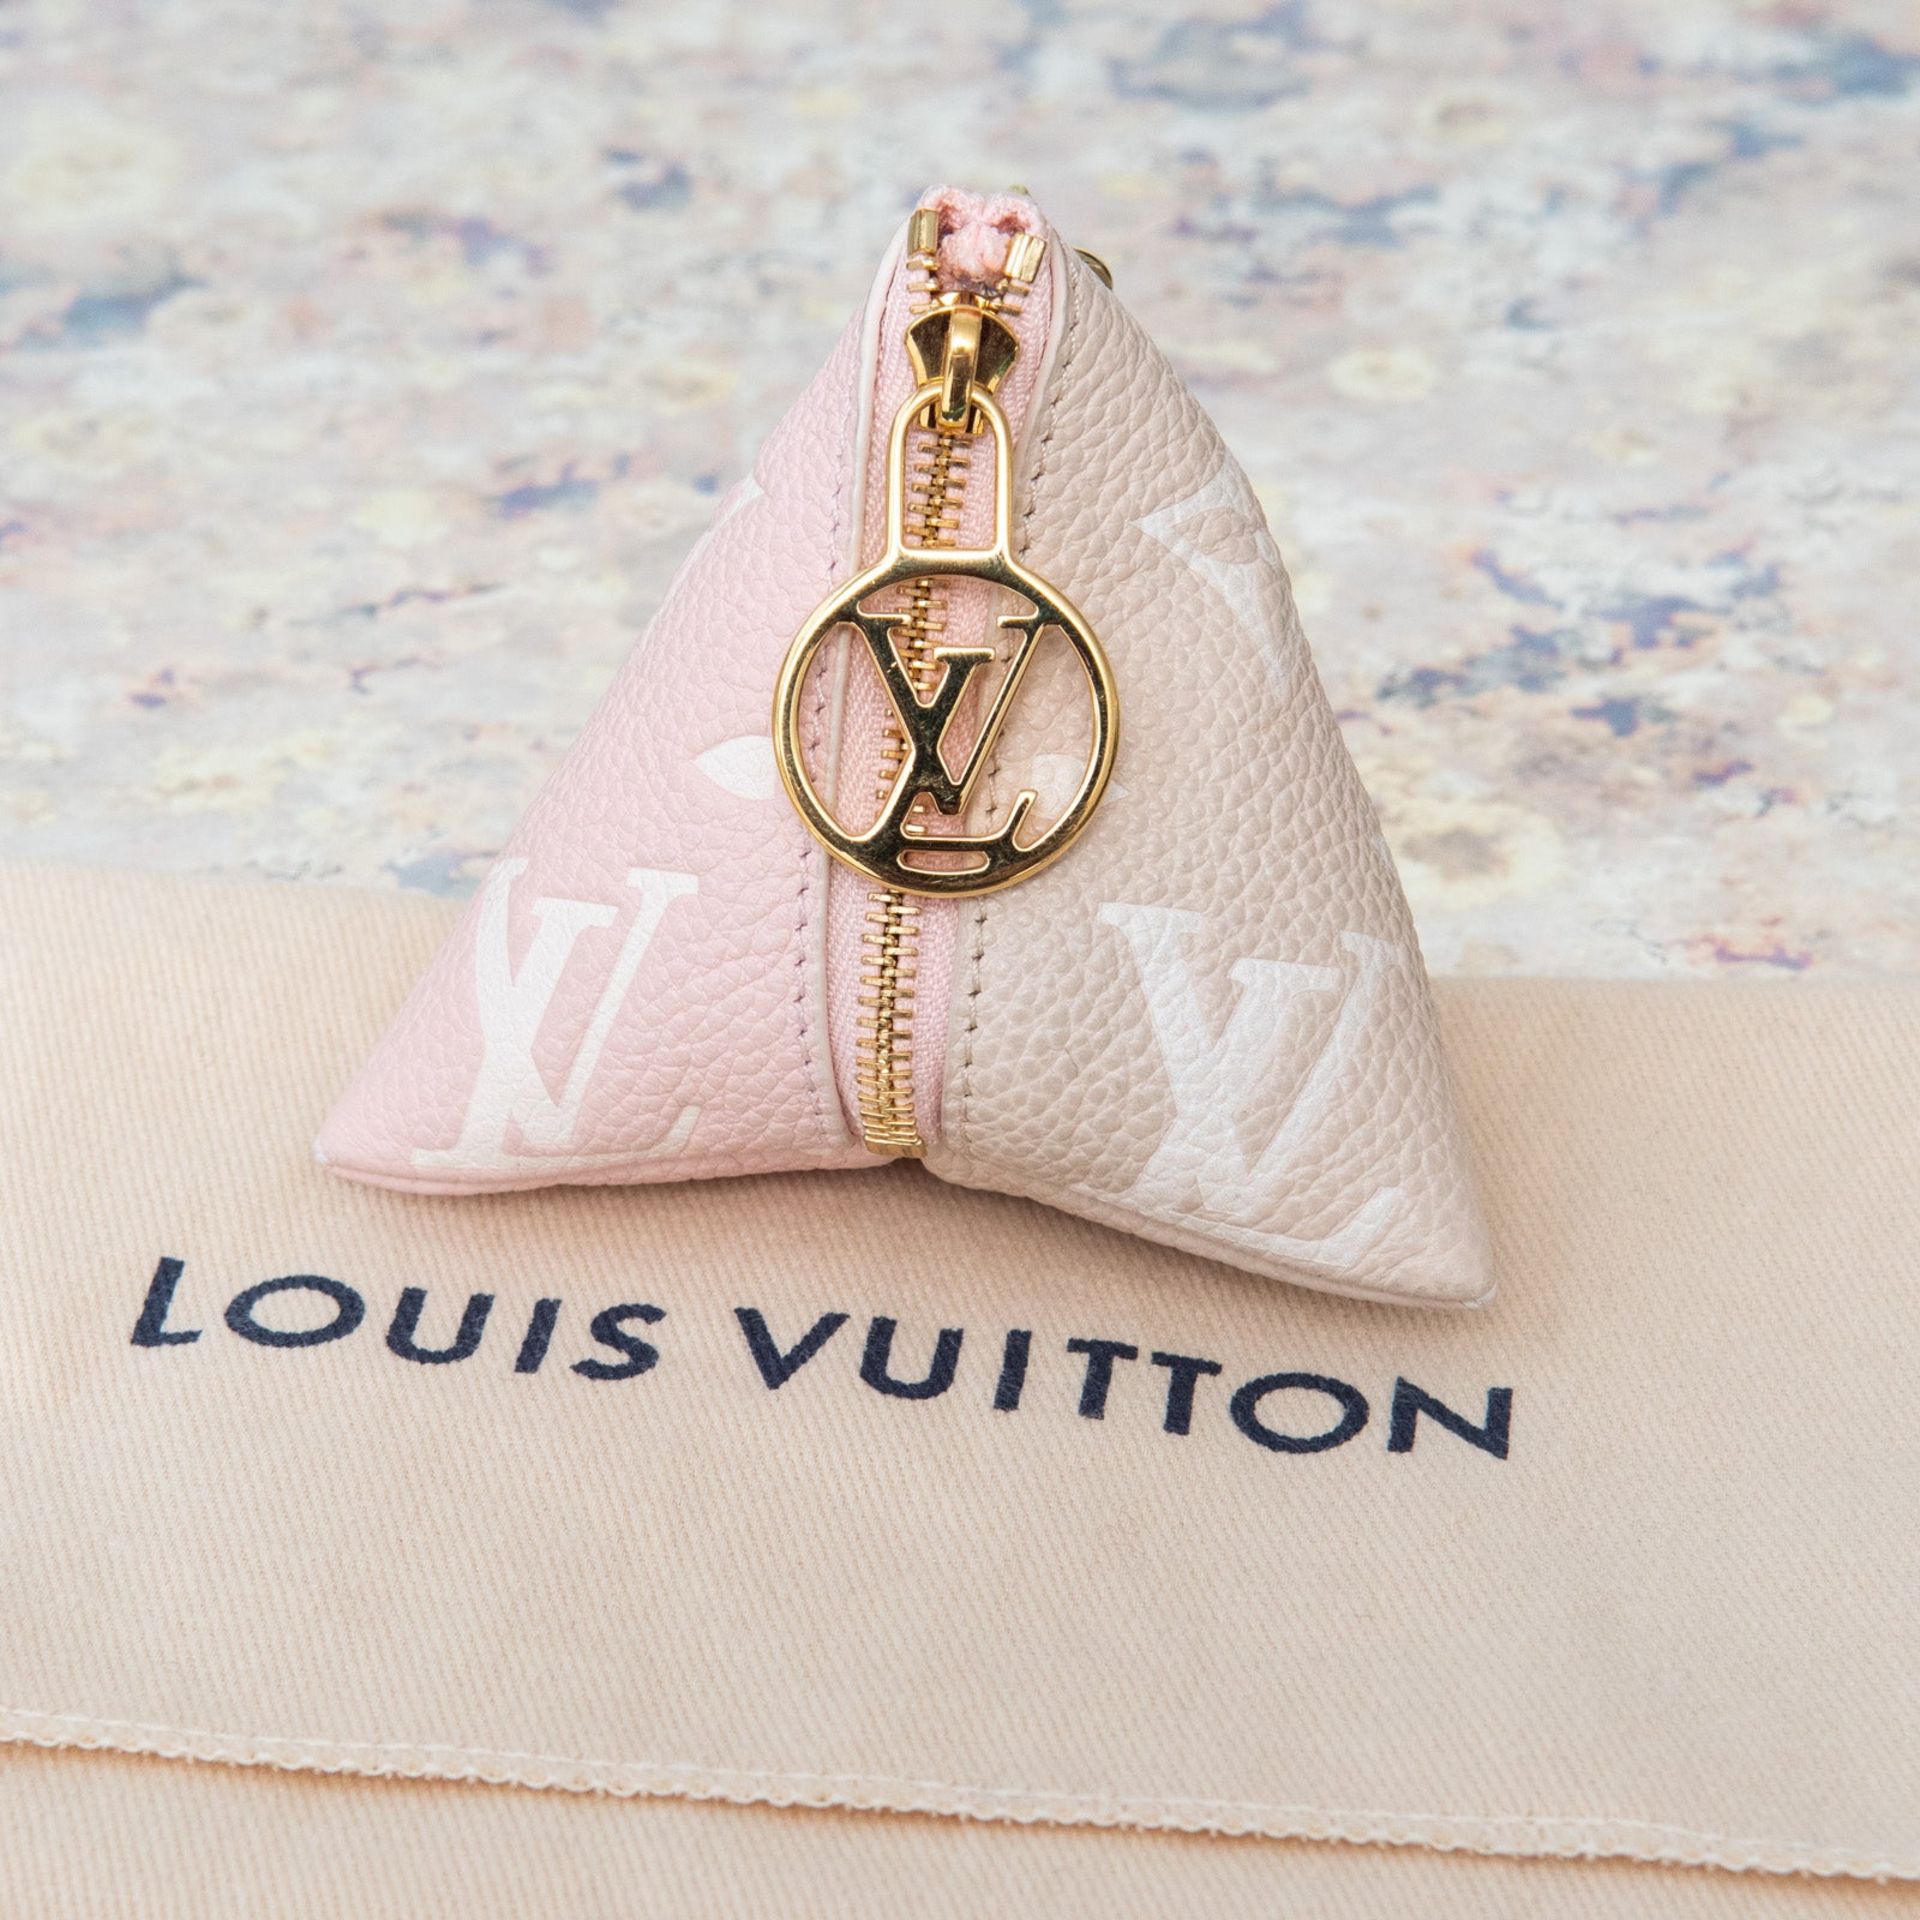 Louis Vuitton Berlingot Bag Charm And Key Holder - Image 5 of 5